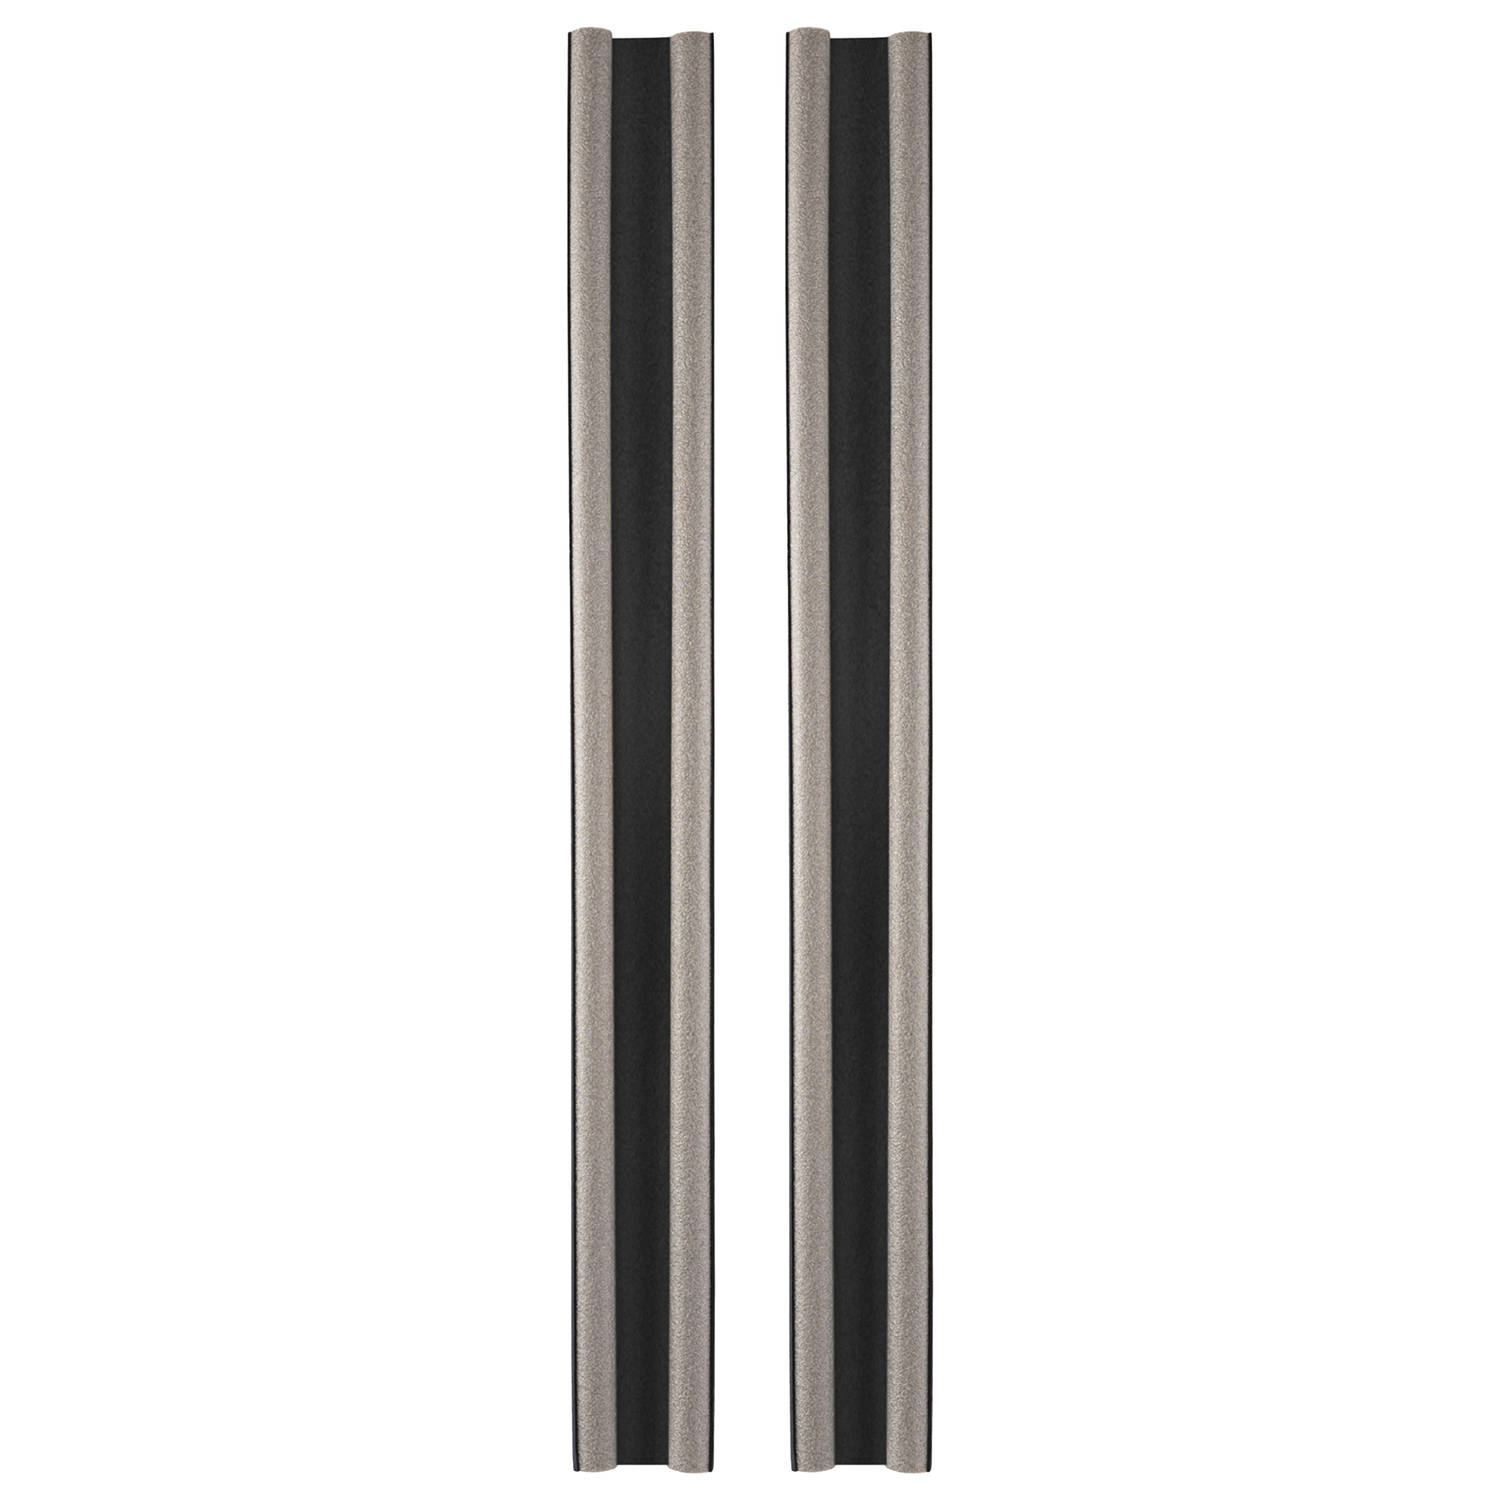 Tochtstrip - 2x - tochtwering - grijs - foam - 95 x 2,5 cm - deur tochtstopper - Tochtstrippen